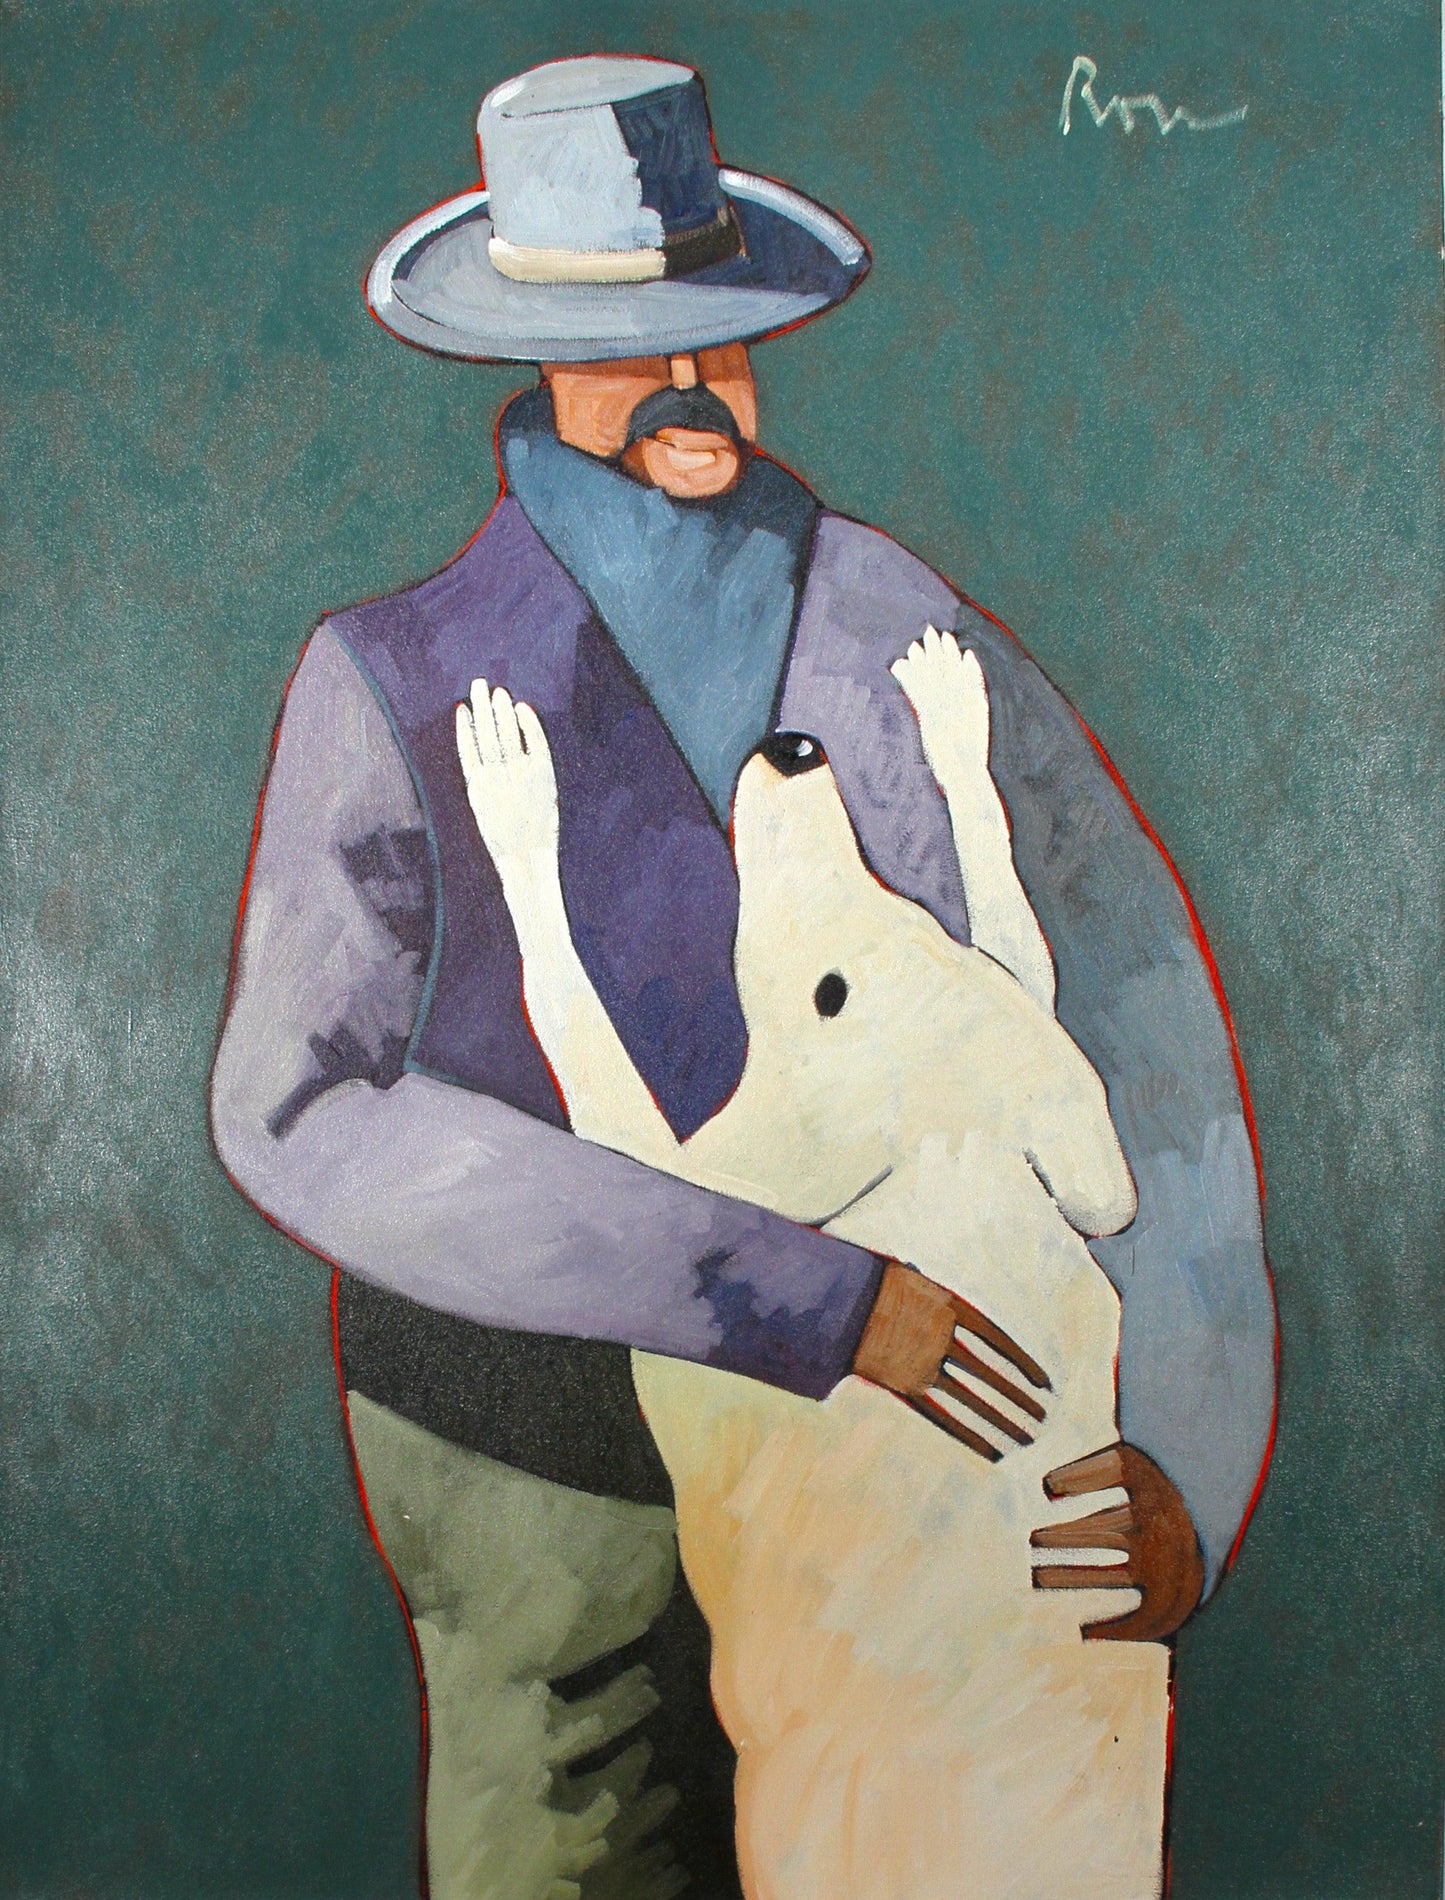 Man's Best Friend-Painting-Thom Ross-Sorrel Sky Gallery